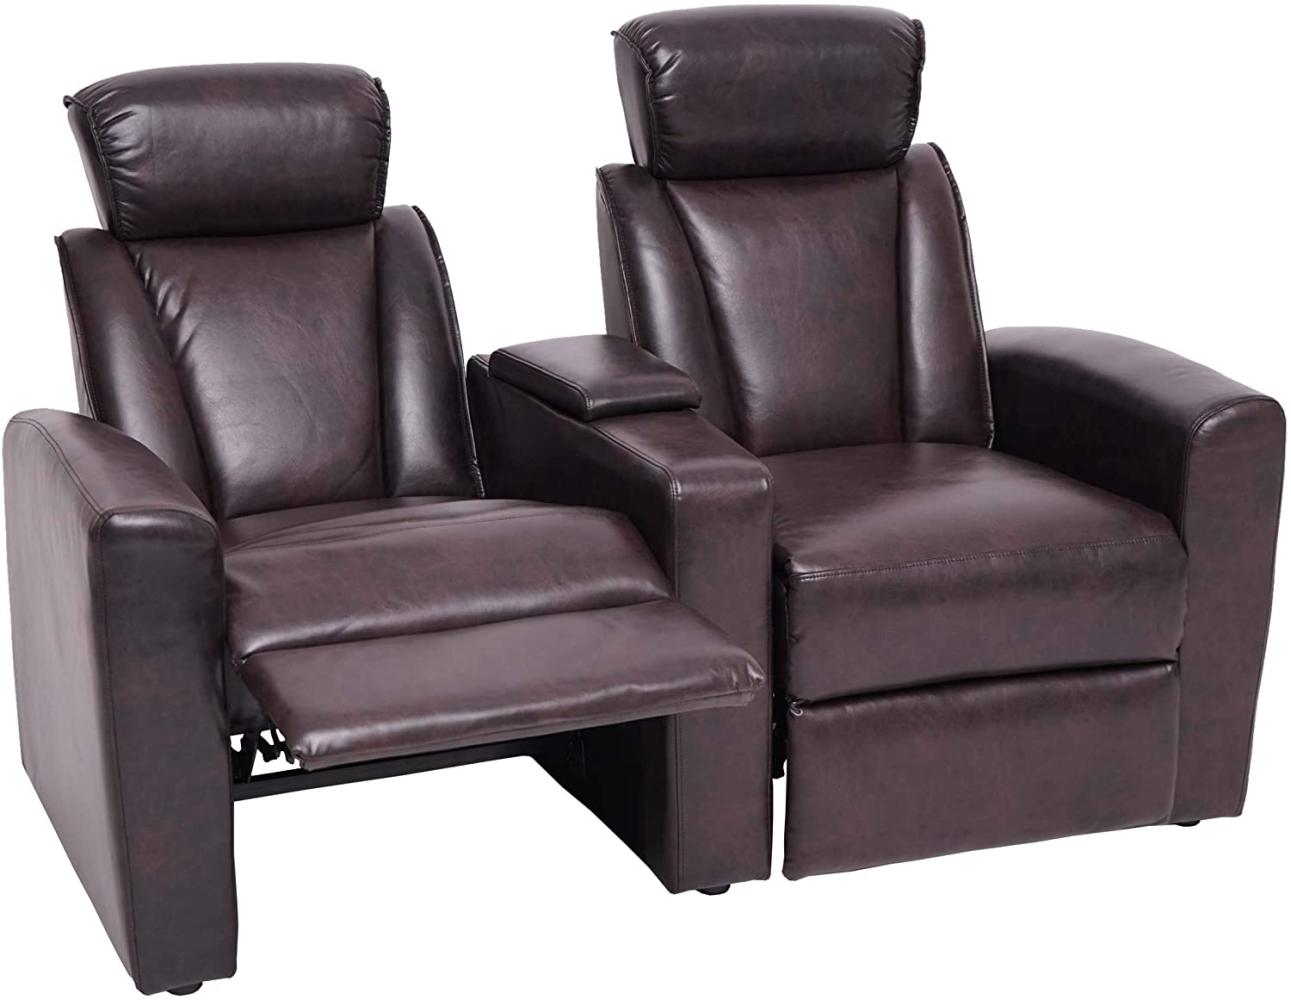 2er Kinosessel HWC-H30, Relaxsessel Fernsehsessel Zweisitzer Sofa, Staufach Soft Touch Kunstleder ~ braun Bild 1